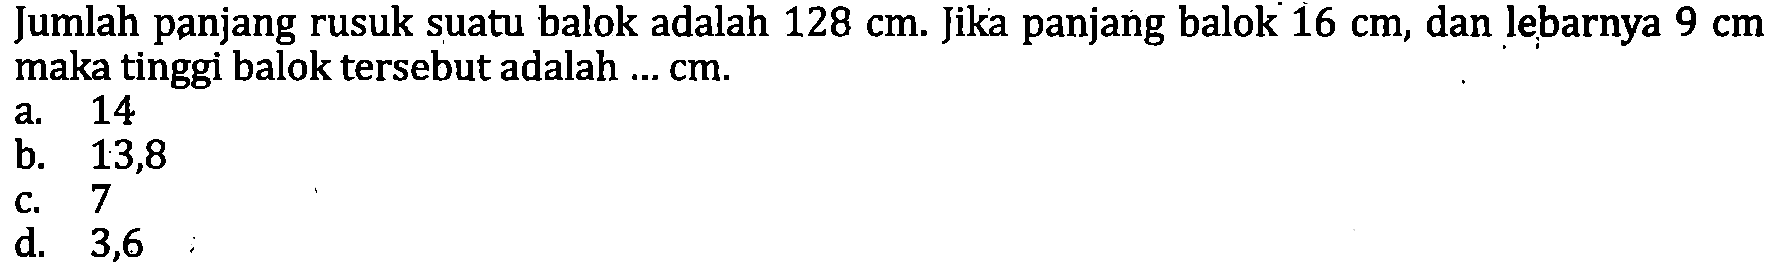 Jumlah panjang rusuk suatu balok adalah  128 cm . Jika panjang balok  16 cm , dan lebarnya  9 cm  maka tinggi balok tersebut adalah  ... cm .
a. 14
b. 13,8
c. 7
d.   3,6 